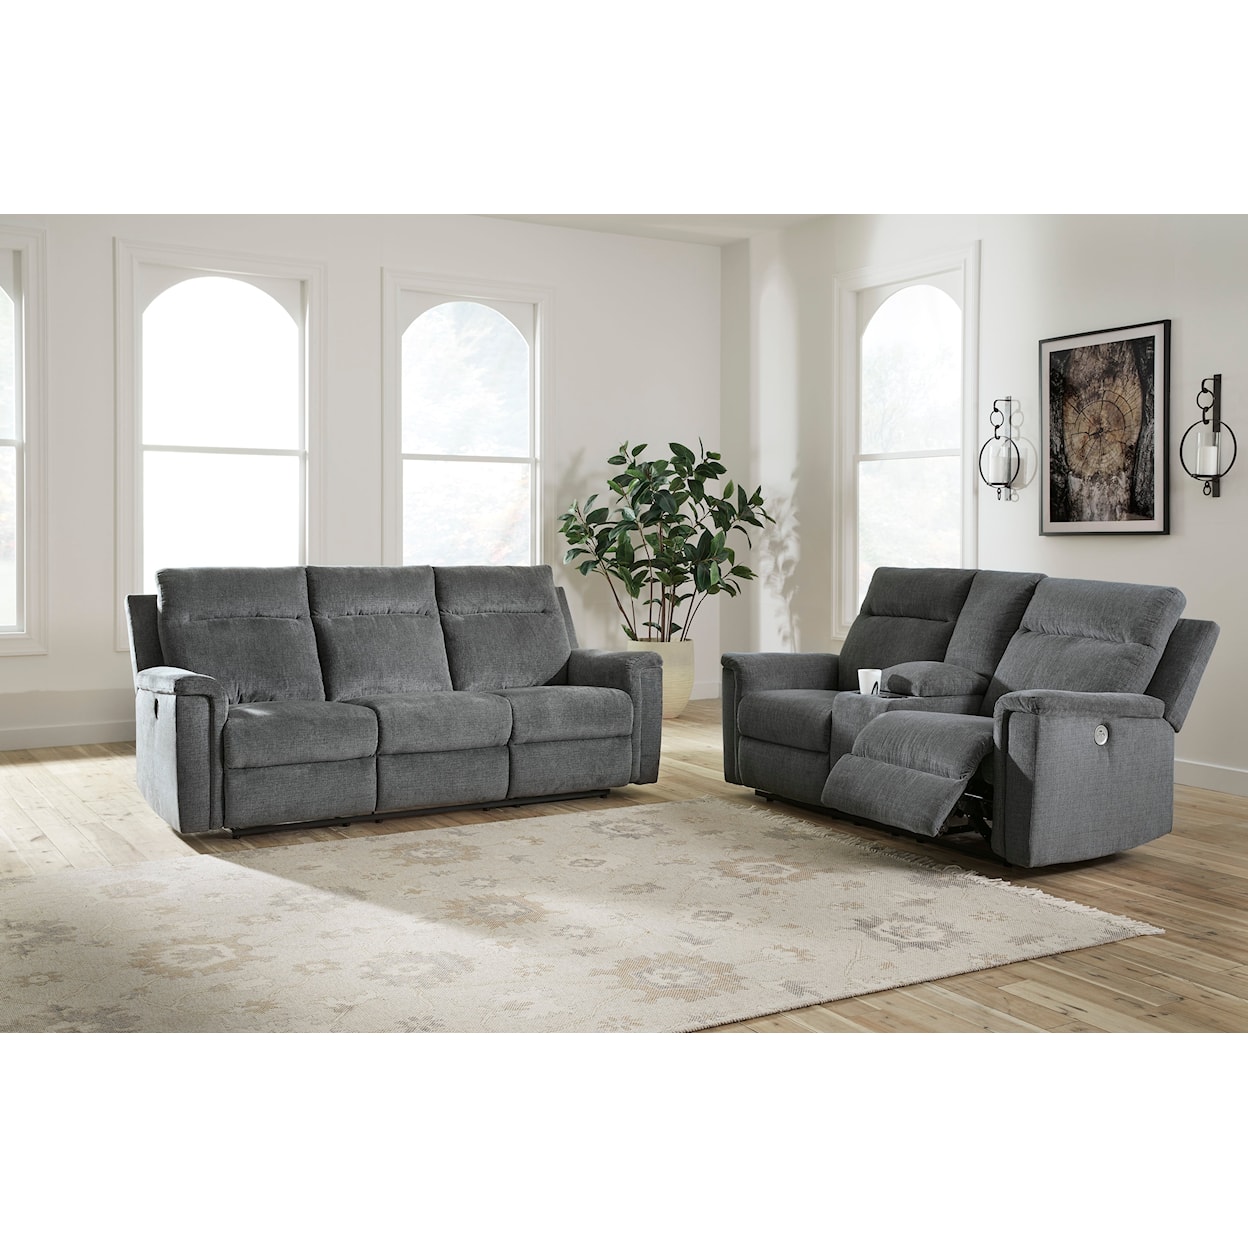 Ashley Furniture Signature Design Barnsana Living Room Set